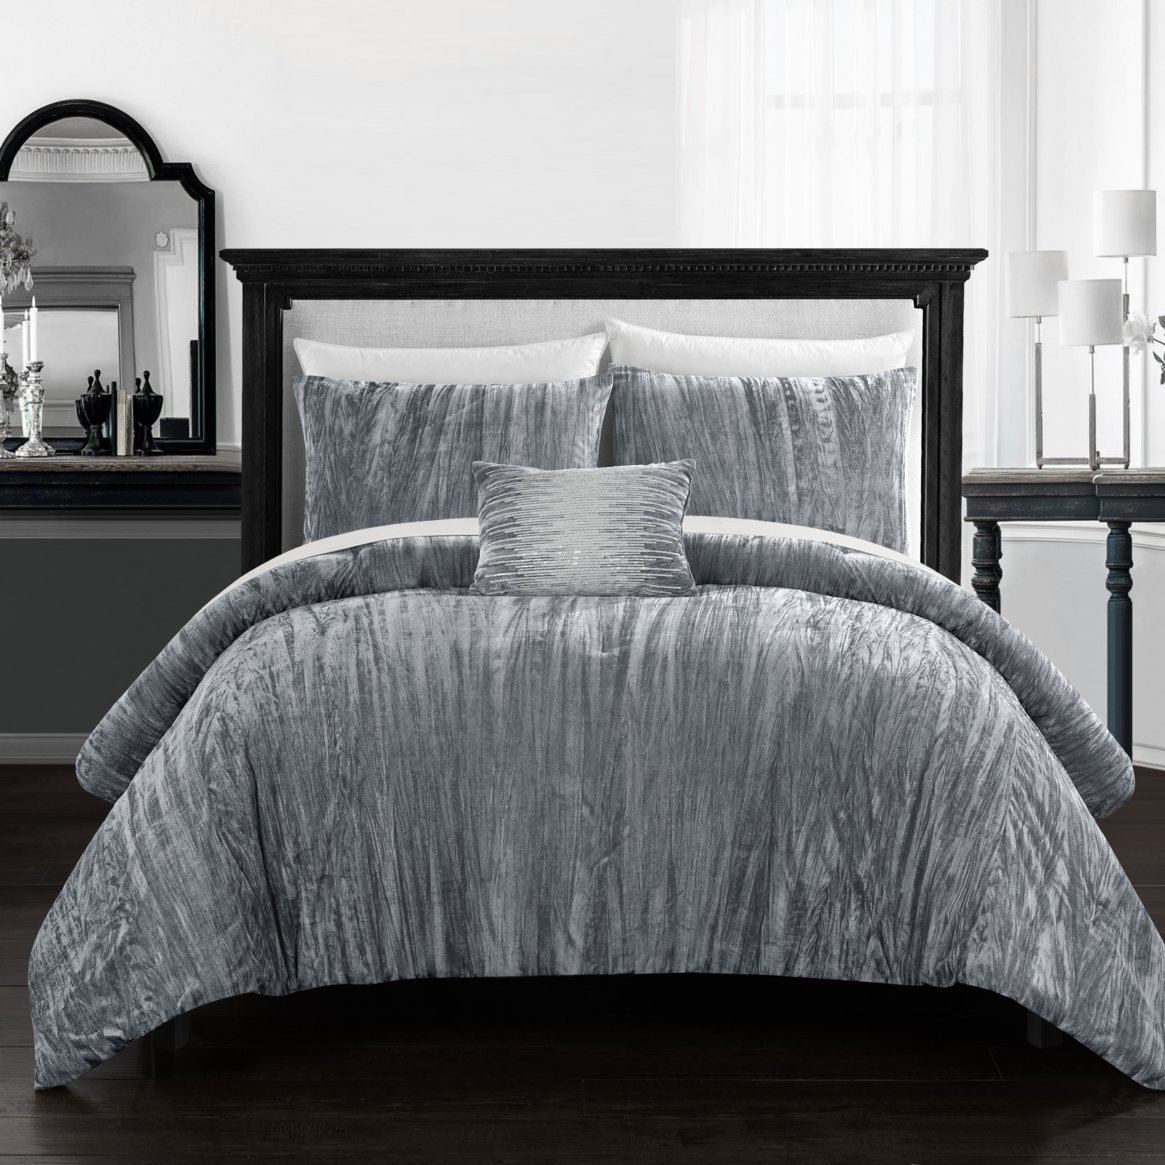 Merieta 8 Piece Comforter Set Crinkle Crushed Velvet Bed In A Bag Bedding - Grey, King